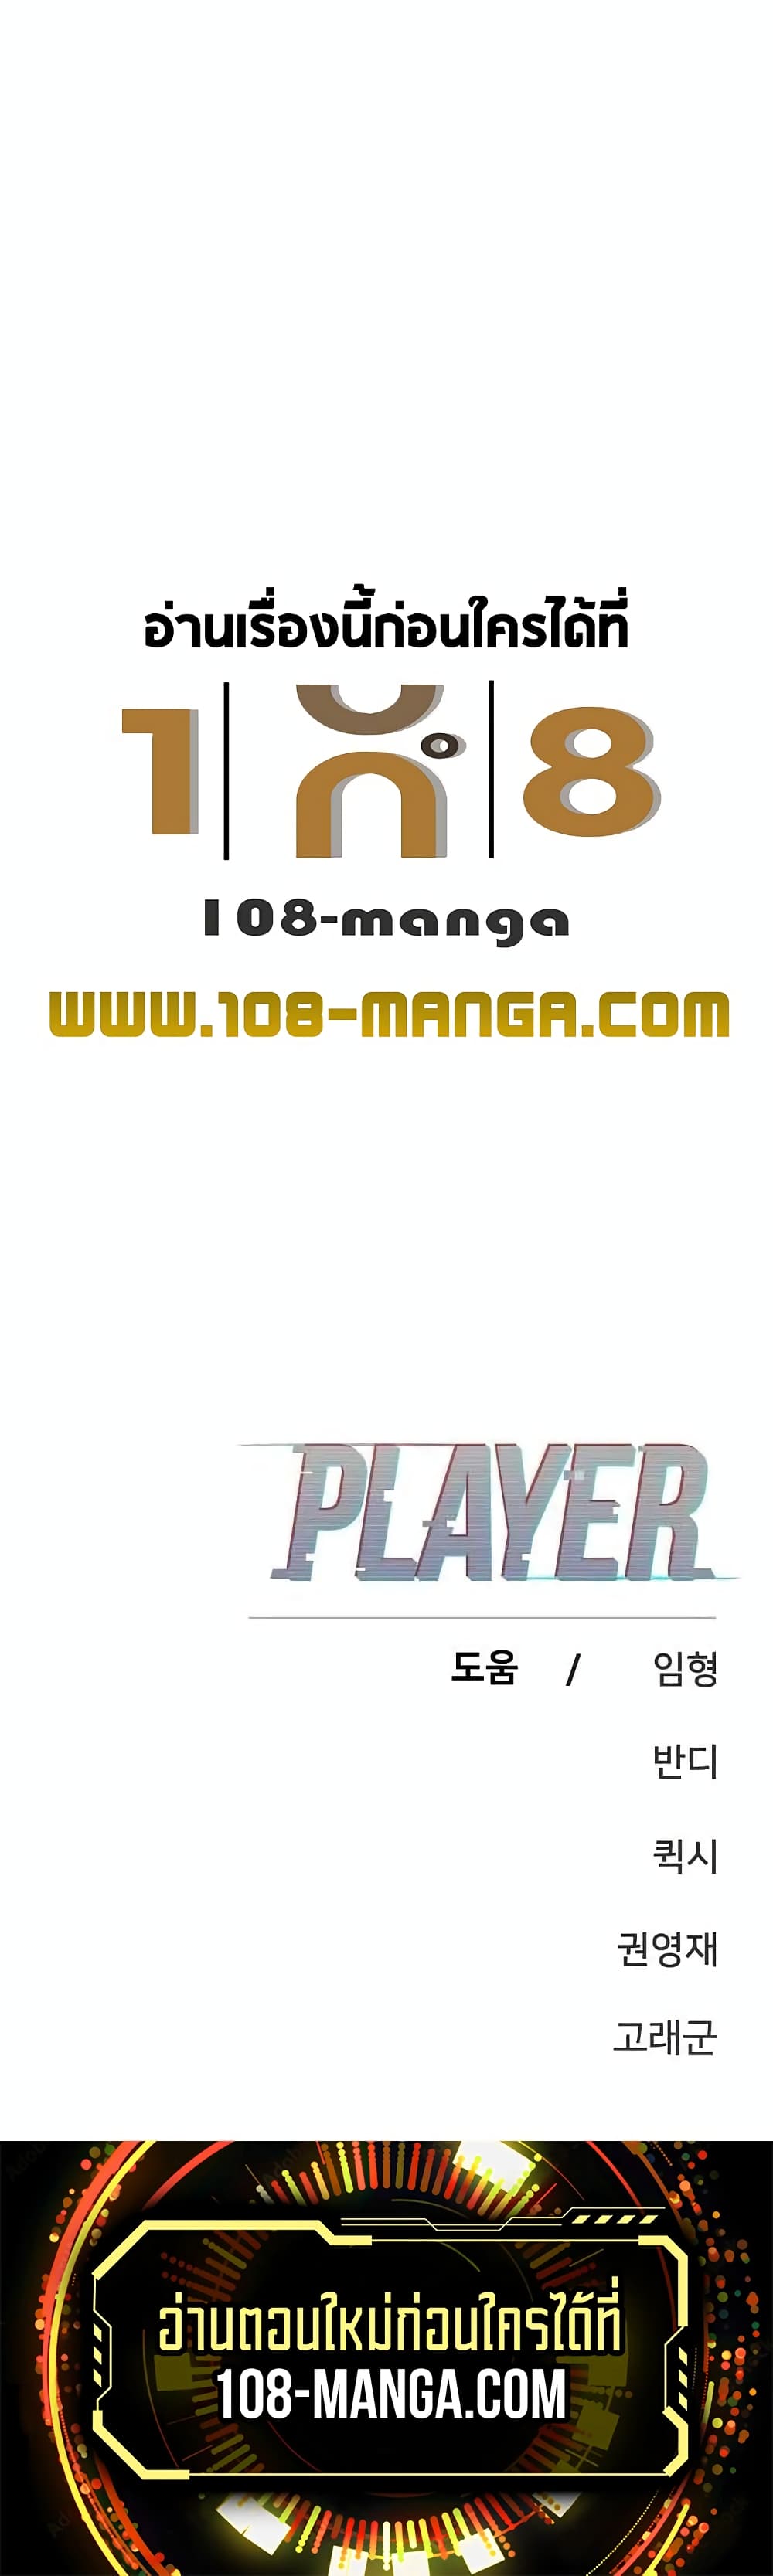 Player 124 60